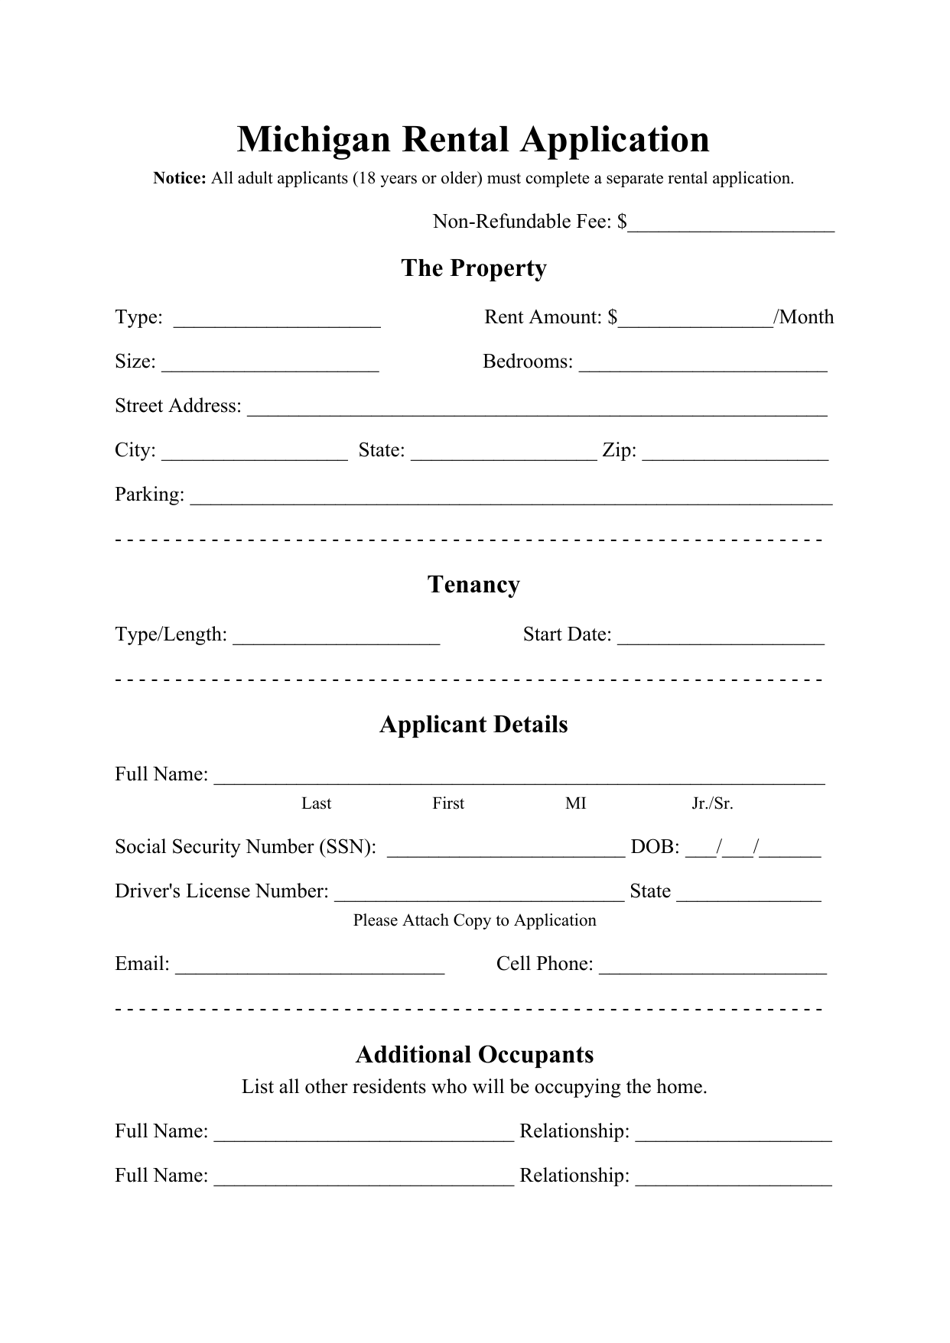 Rental Application Form - Michigan, Page 1